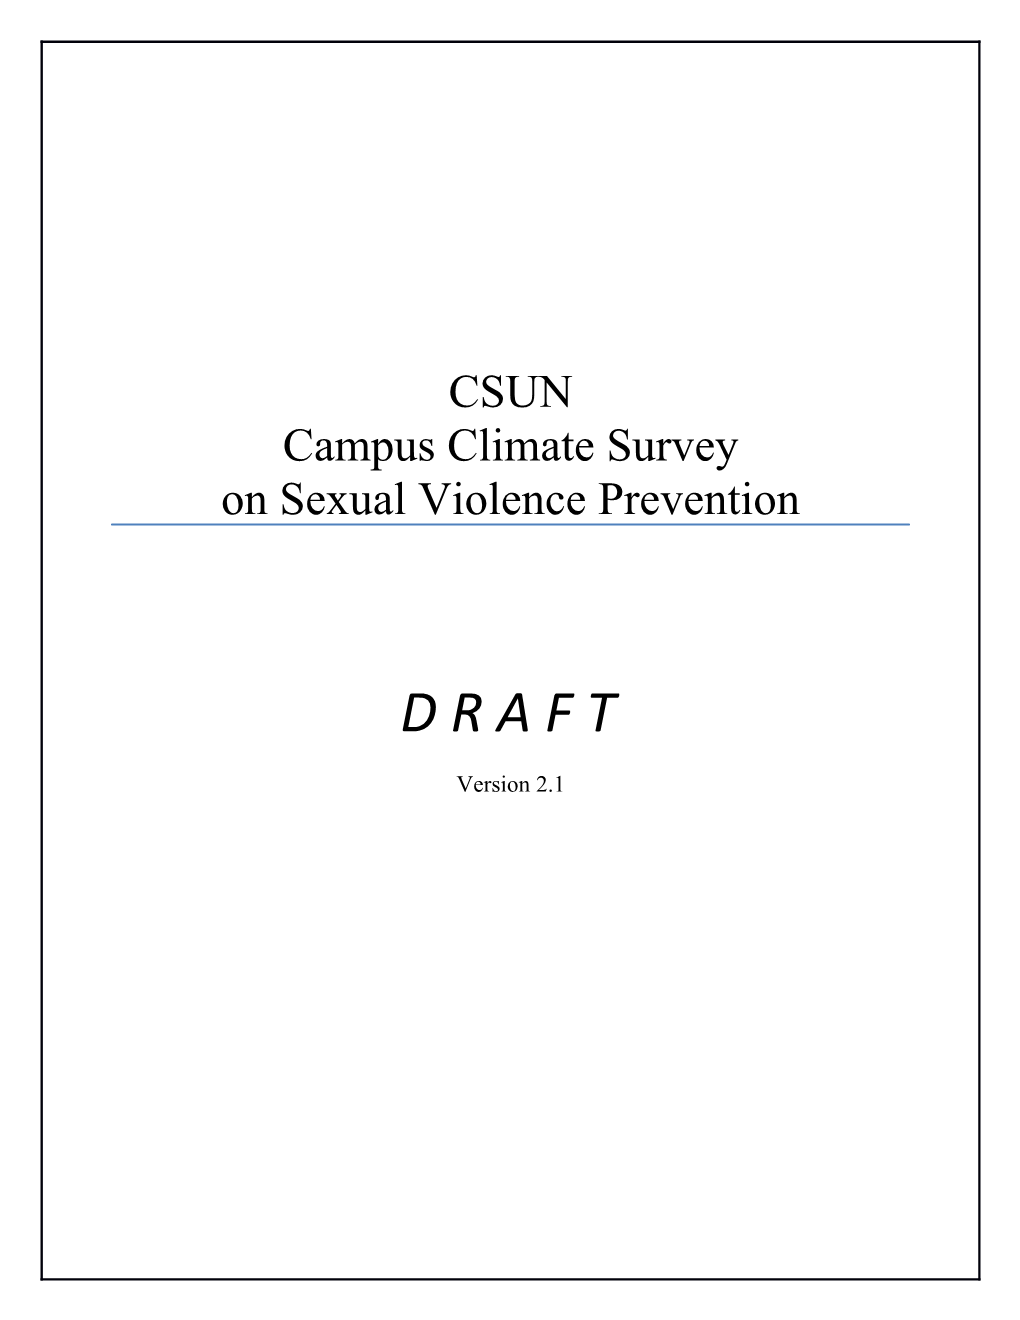 CSUN Campus Climate Survey on Sexual Violence Prevention